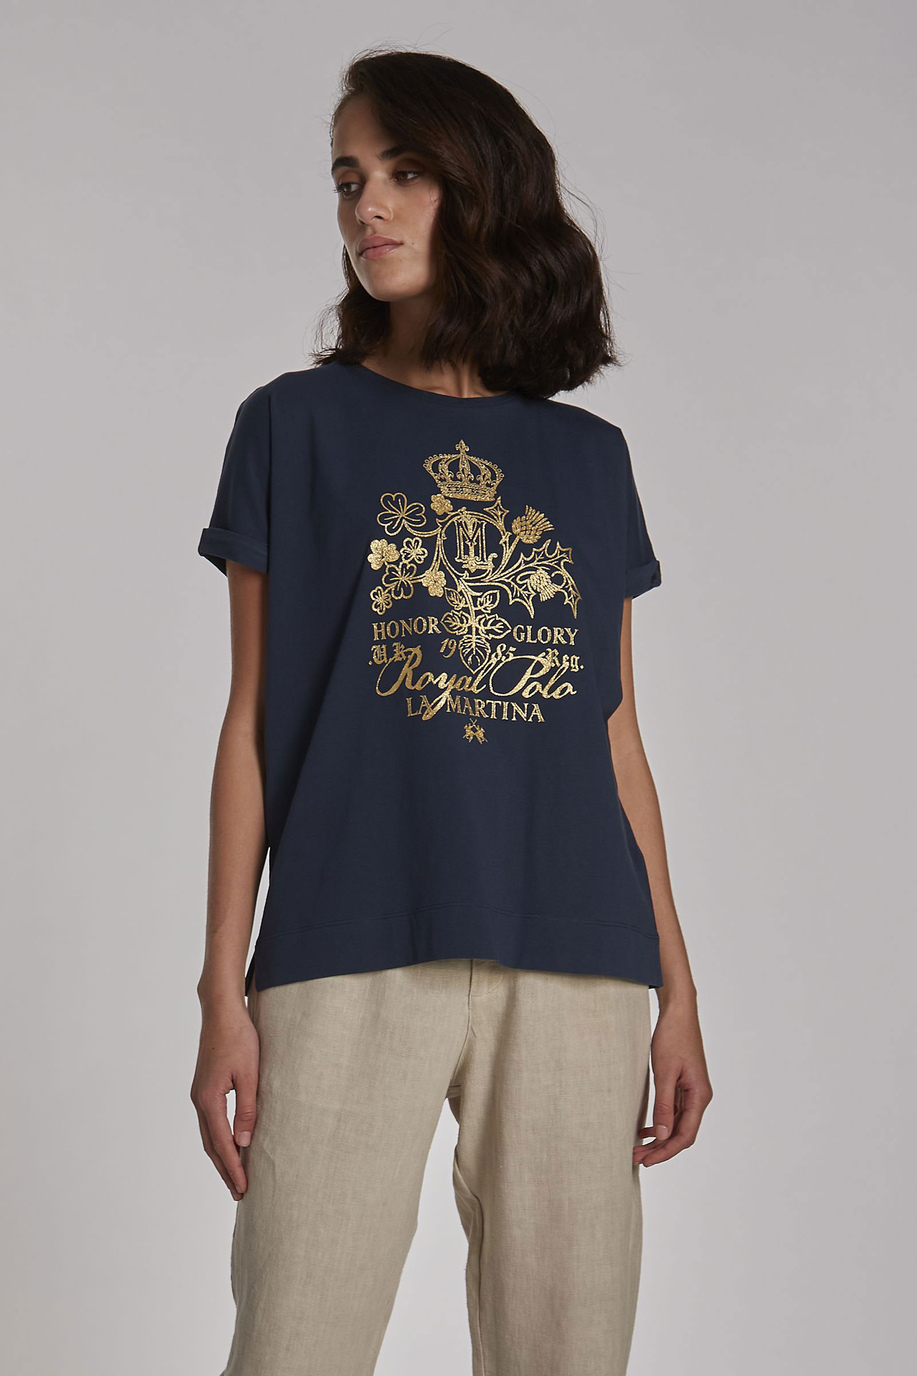 Damen-T-Shirt aus Baumwolle mit Logo, oversized Modell - -50% | step 3 | all | La Martina - Official Online Shop